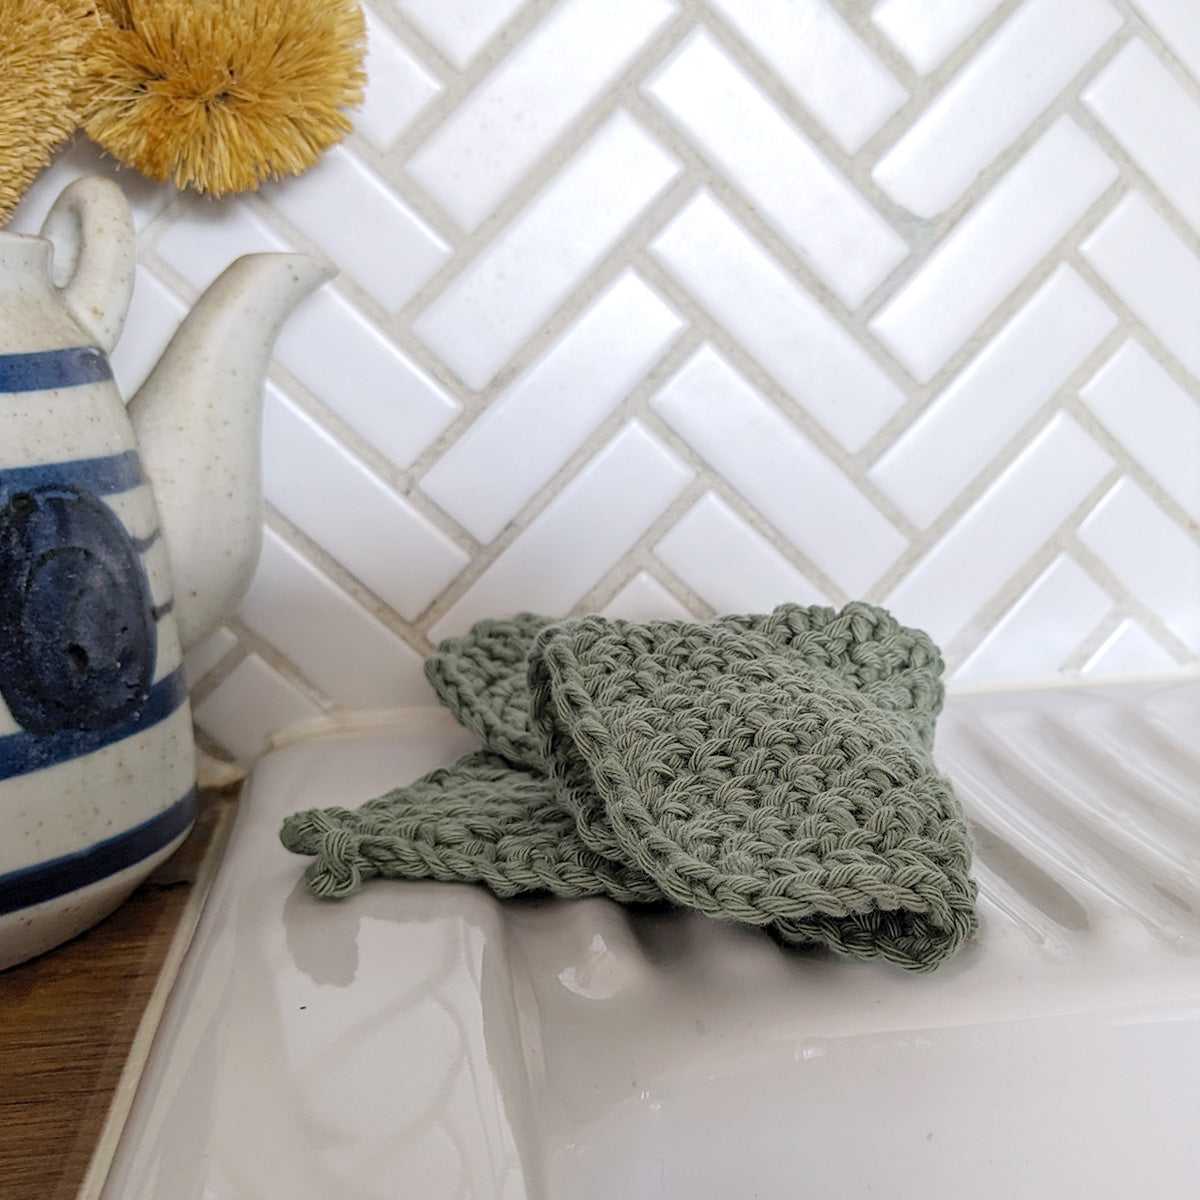 Crochet Cotton Dishcloth 3 Pack